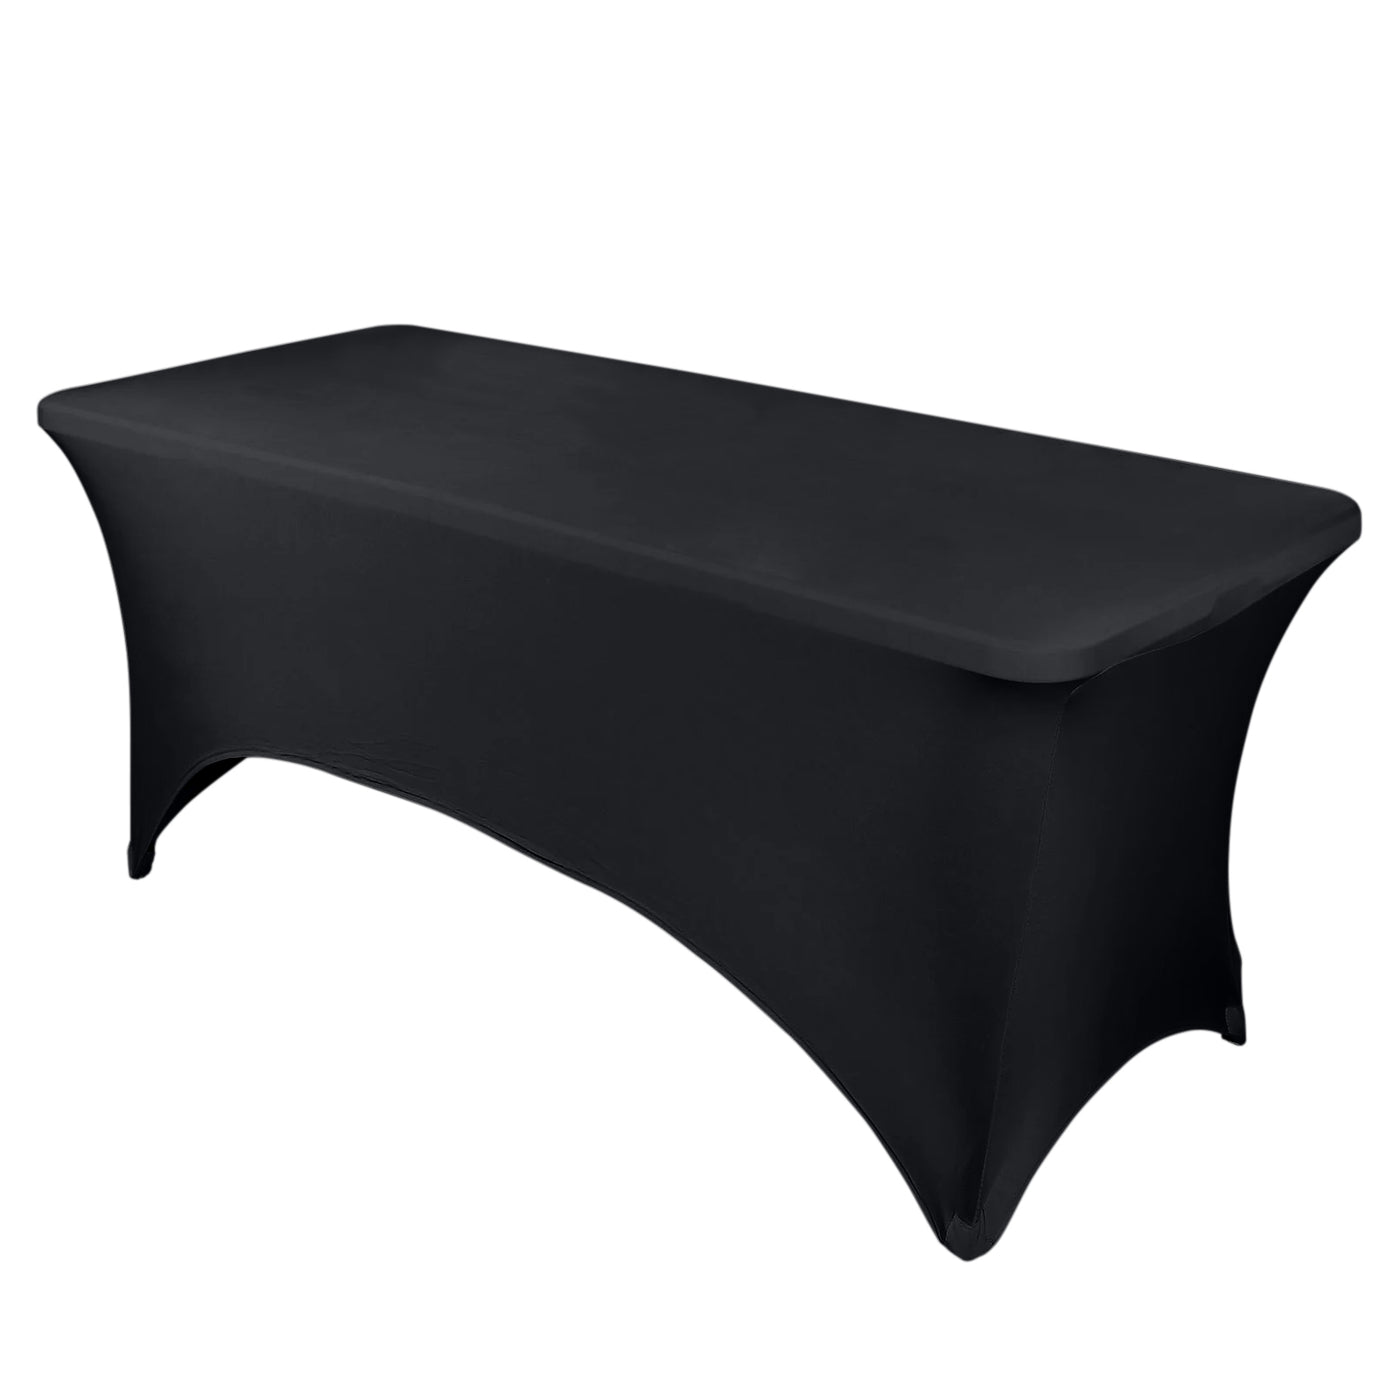 8ft Black Rectangular Spandex Tablecloth | eFavormart.com